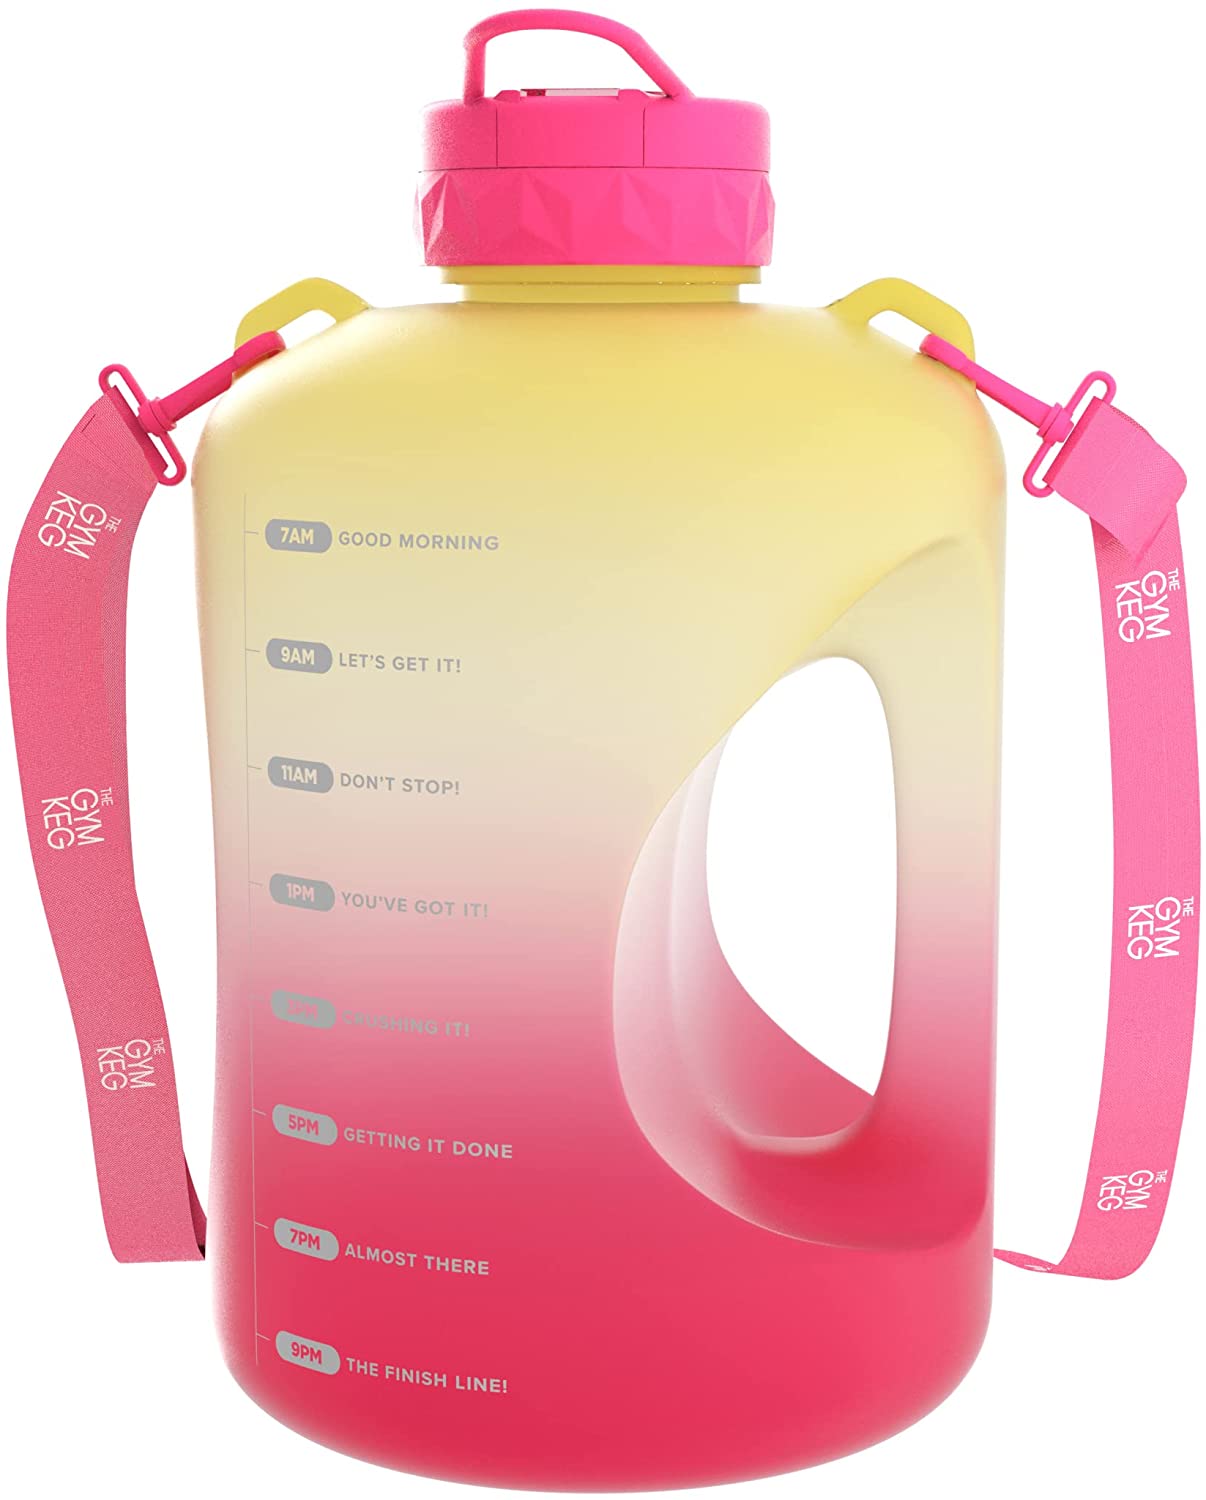 THE GYM KEG 1 Gallon Water Bottle (128oz) I 3.78l Big Water Jug I 128 oz Sports Bottle